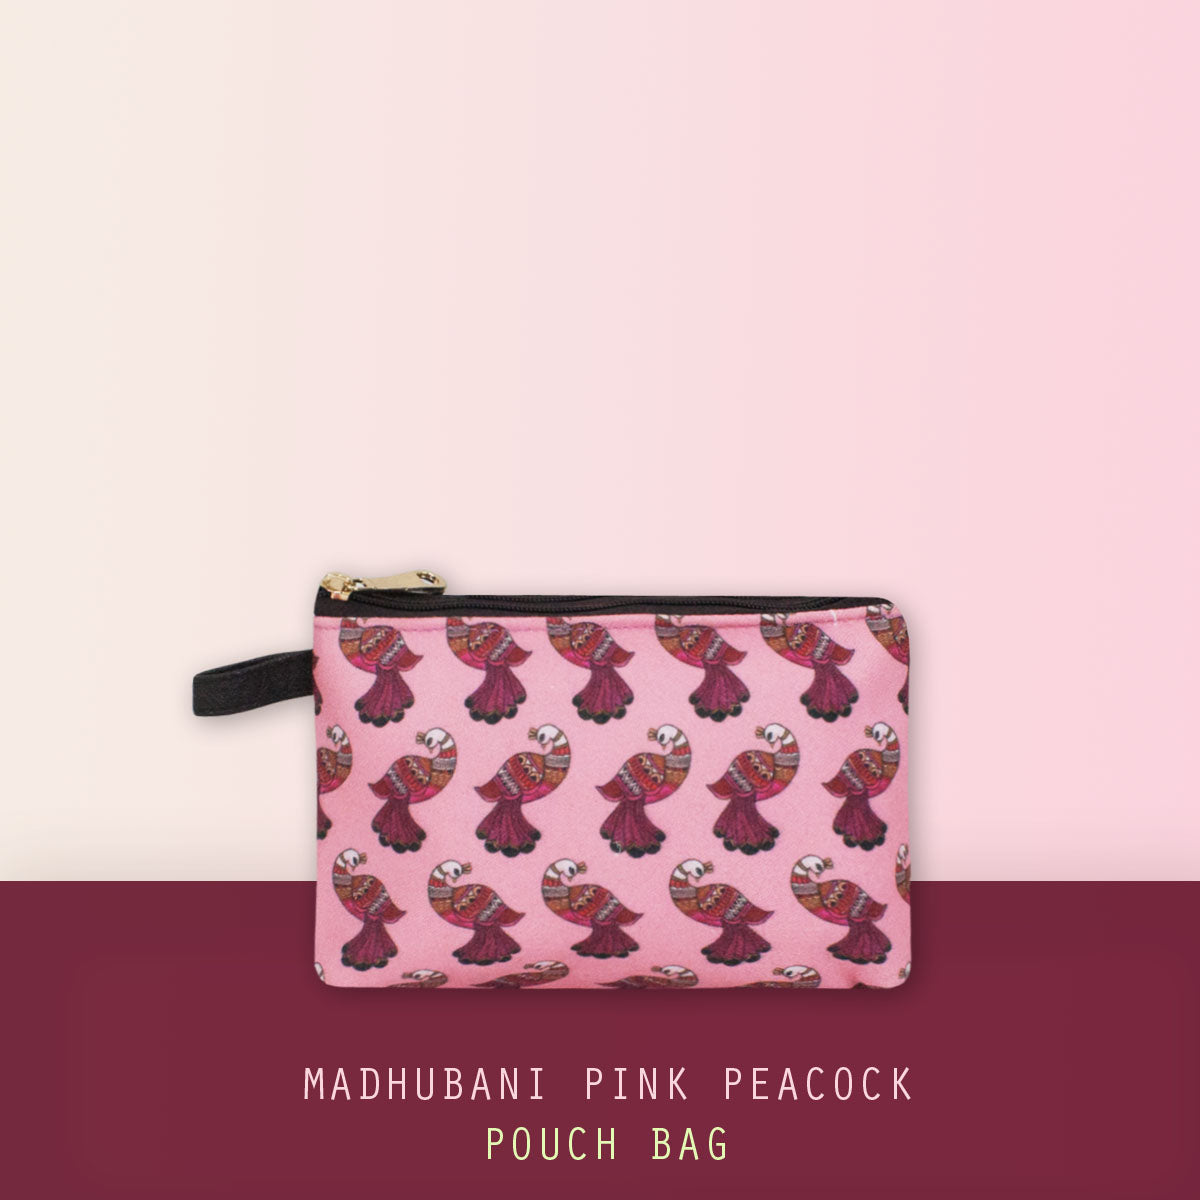 Madhubani Pink Peacock